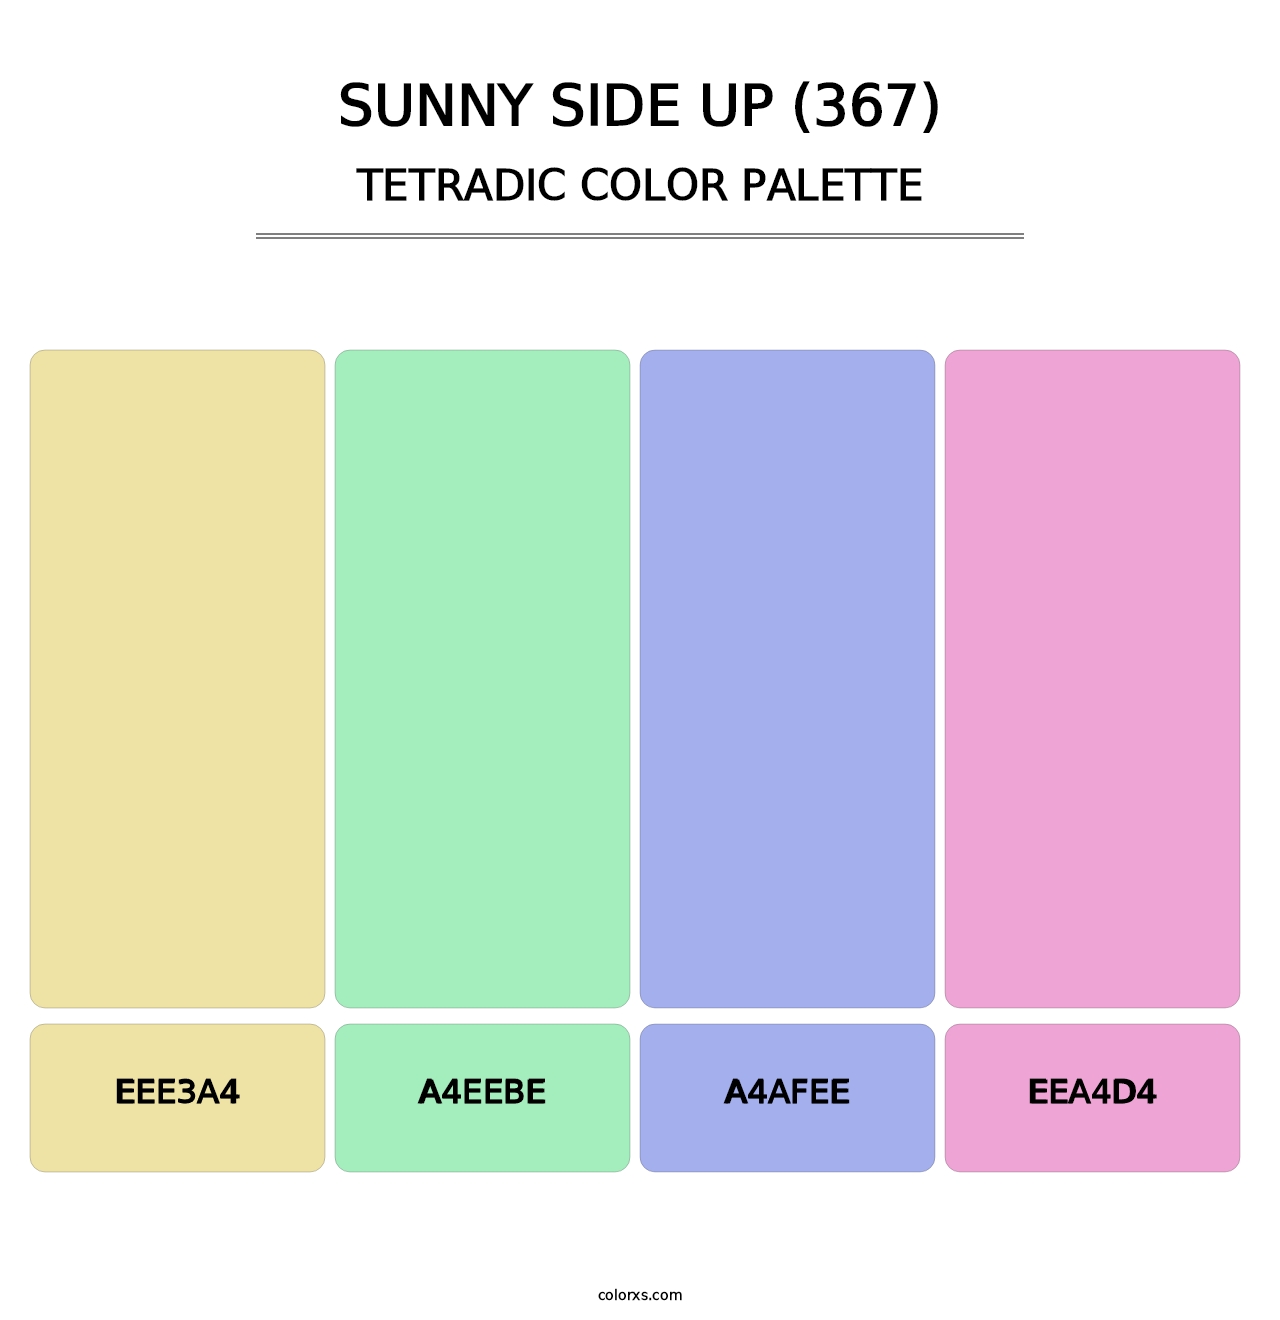 Sunny Side Up (367) - Tetradic Color Palette